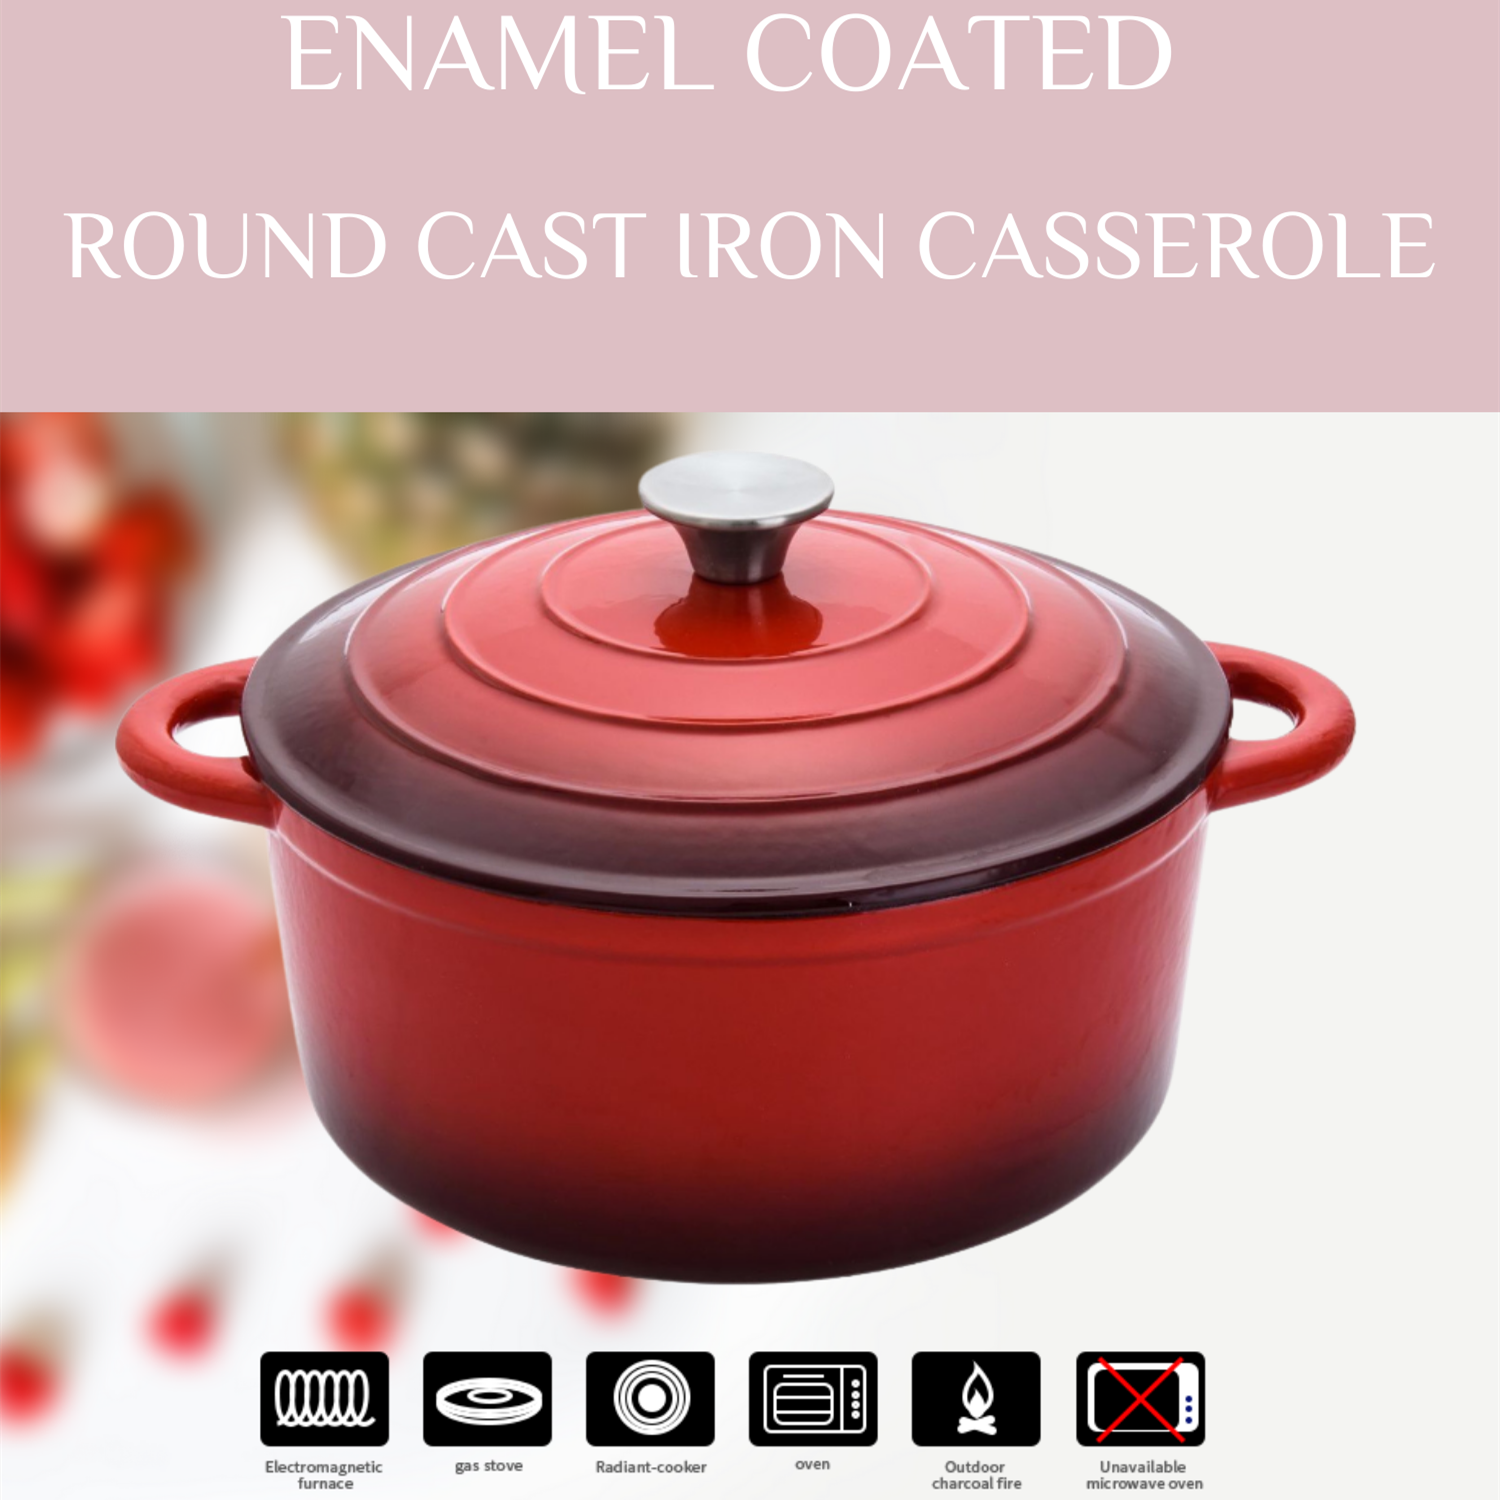 5.3QT Round Red Enamel coated Cast Iron Casserole